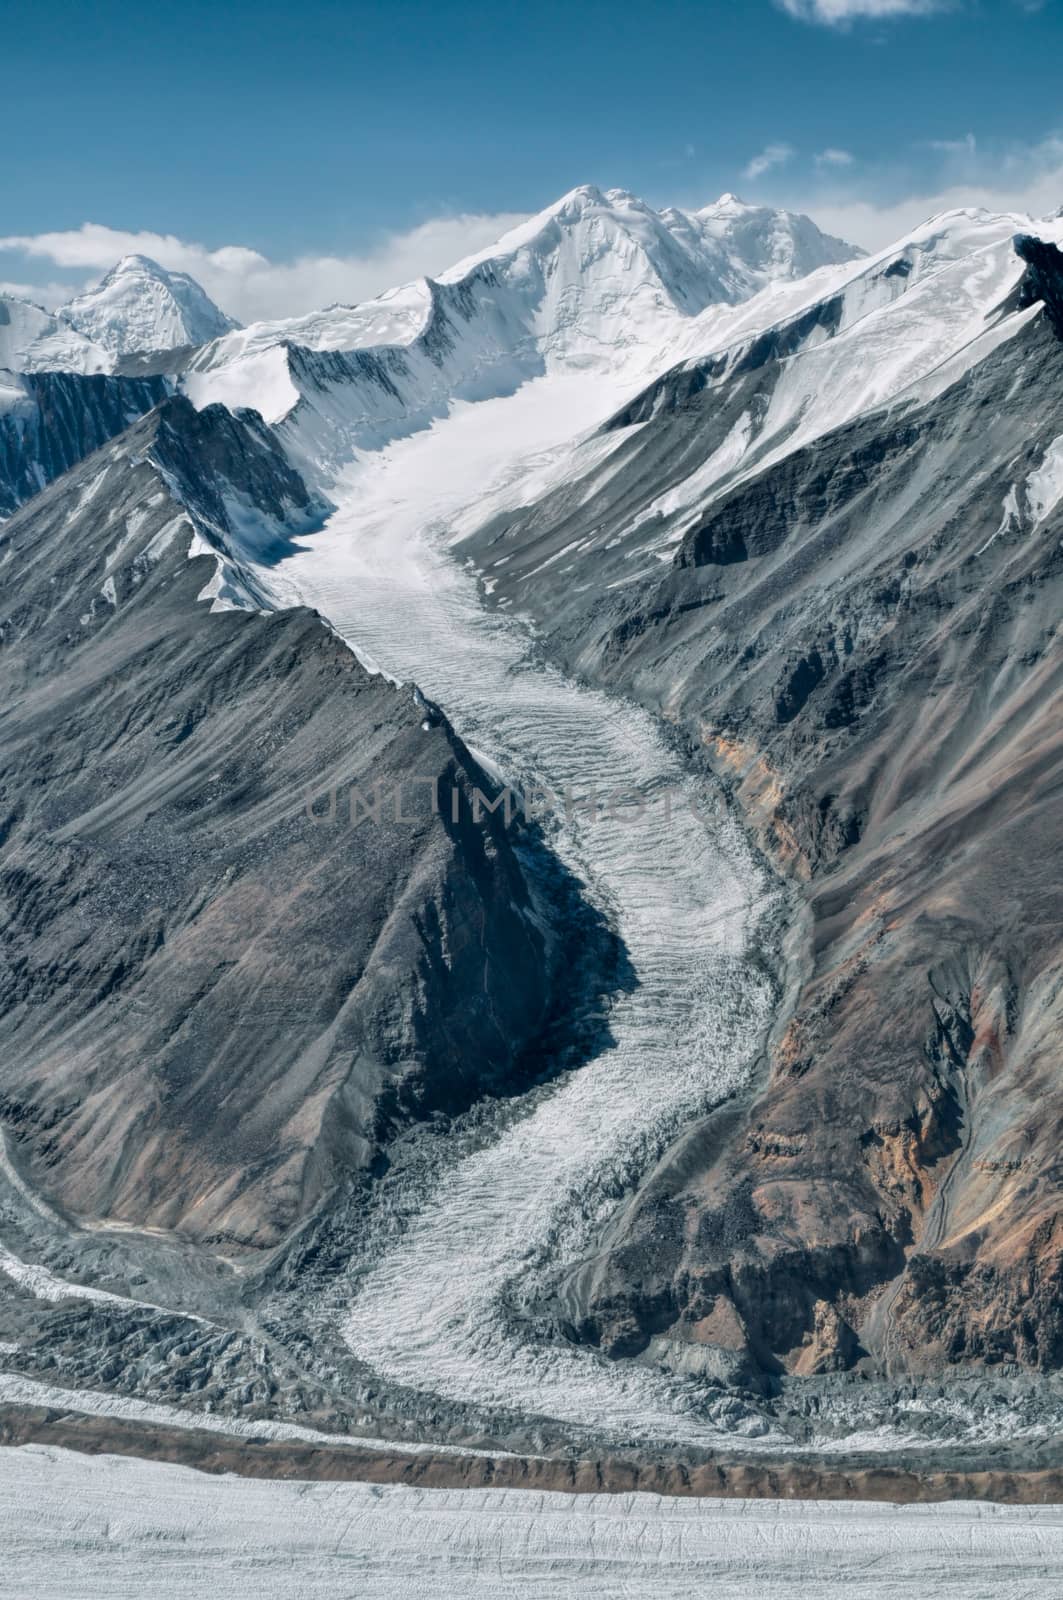 Glacier in Tajikistan by MichalKnitl